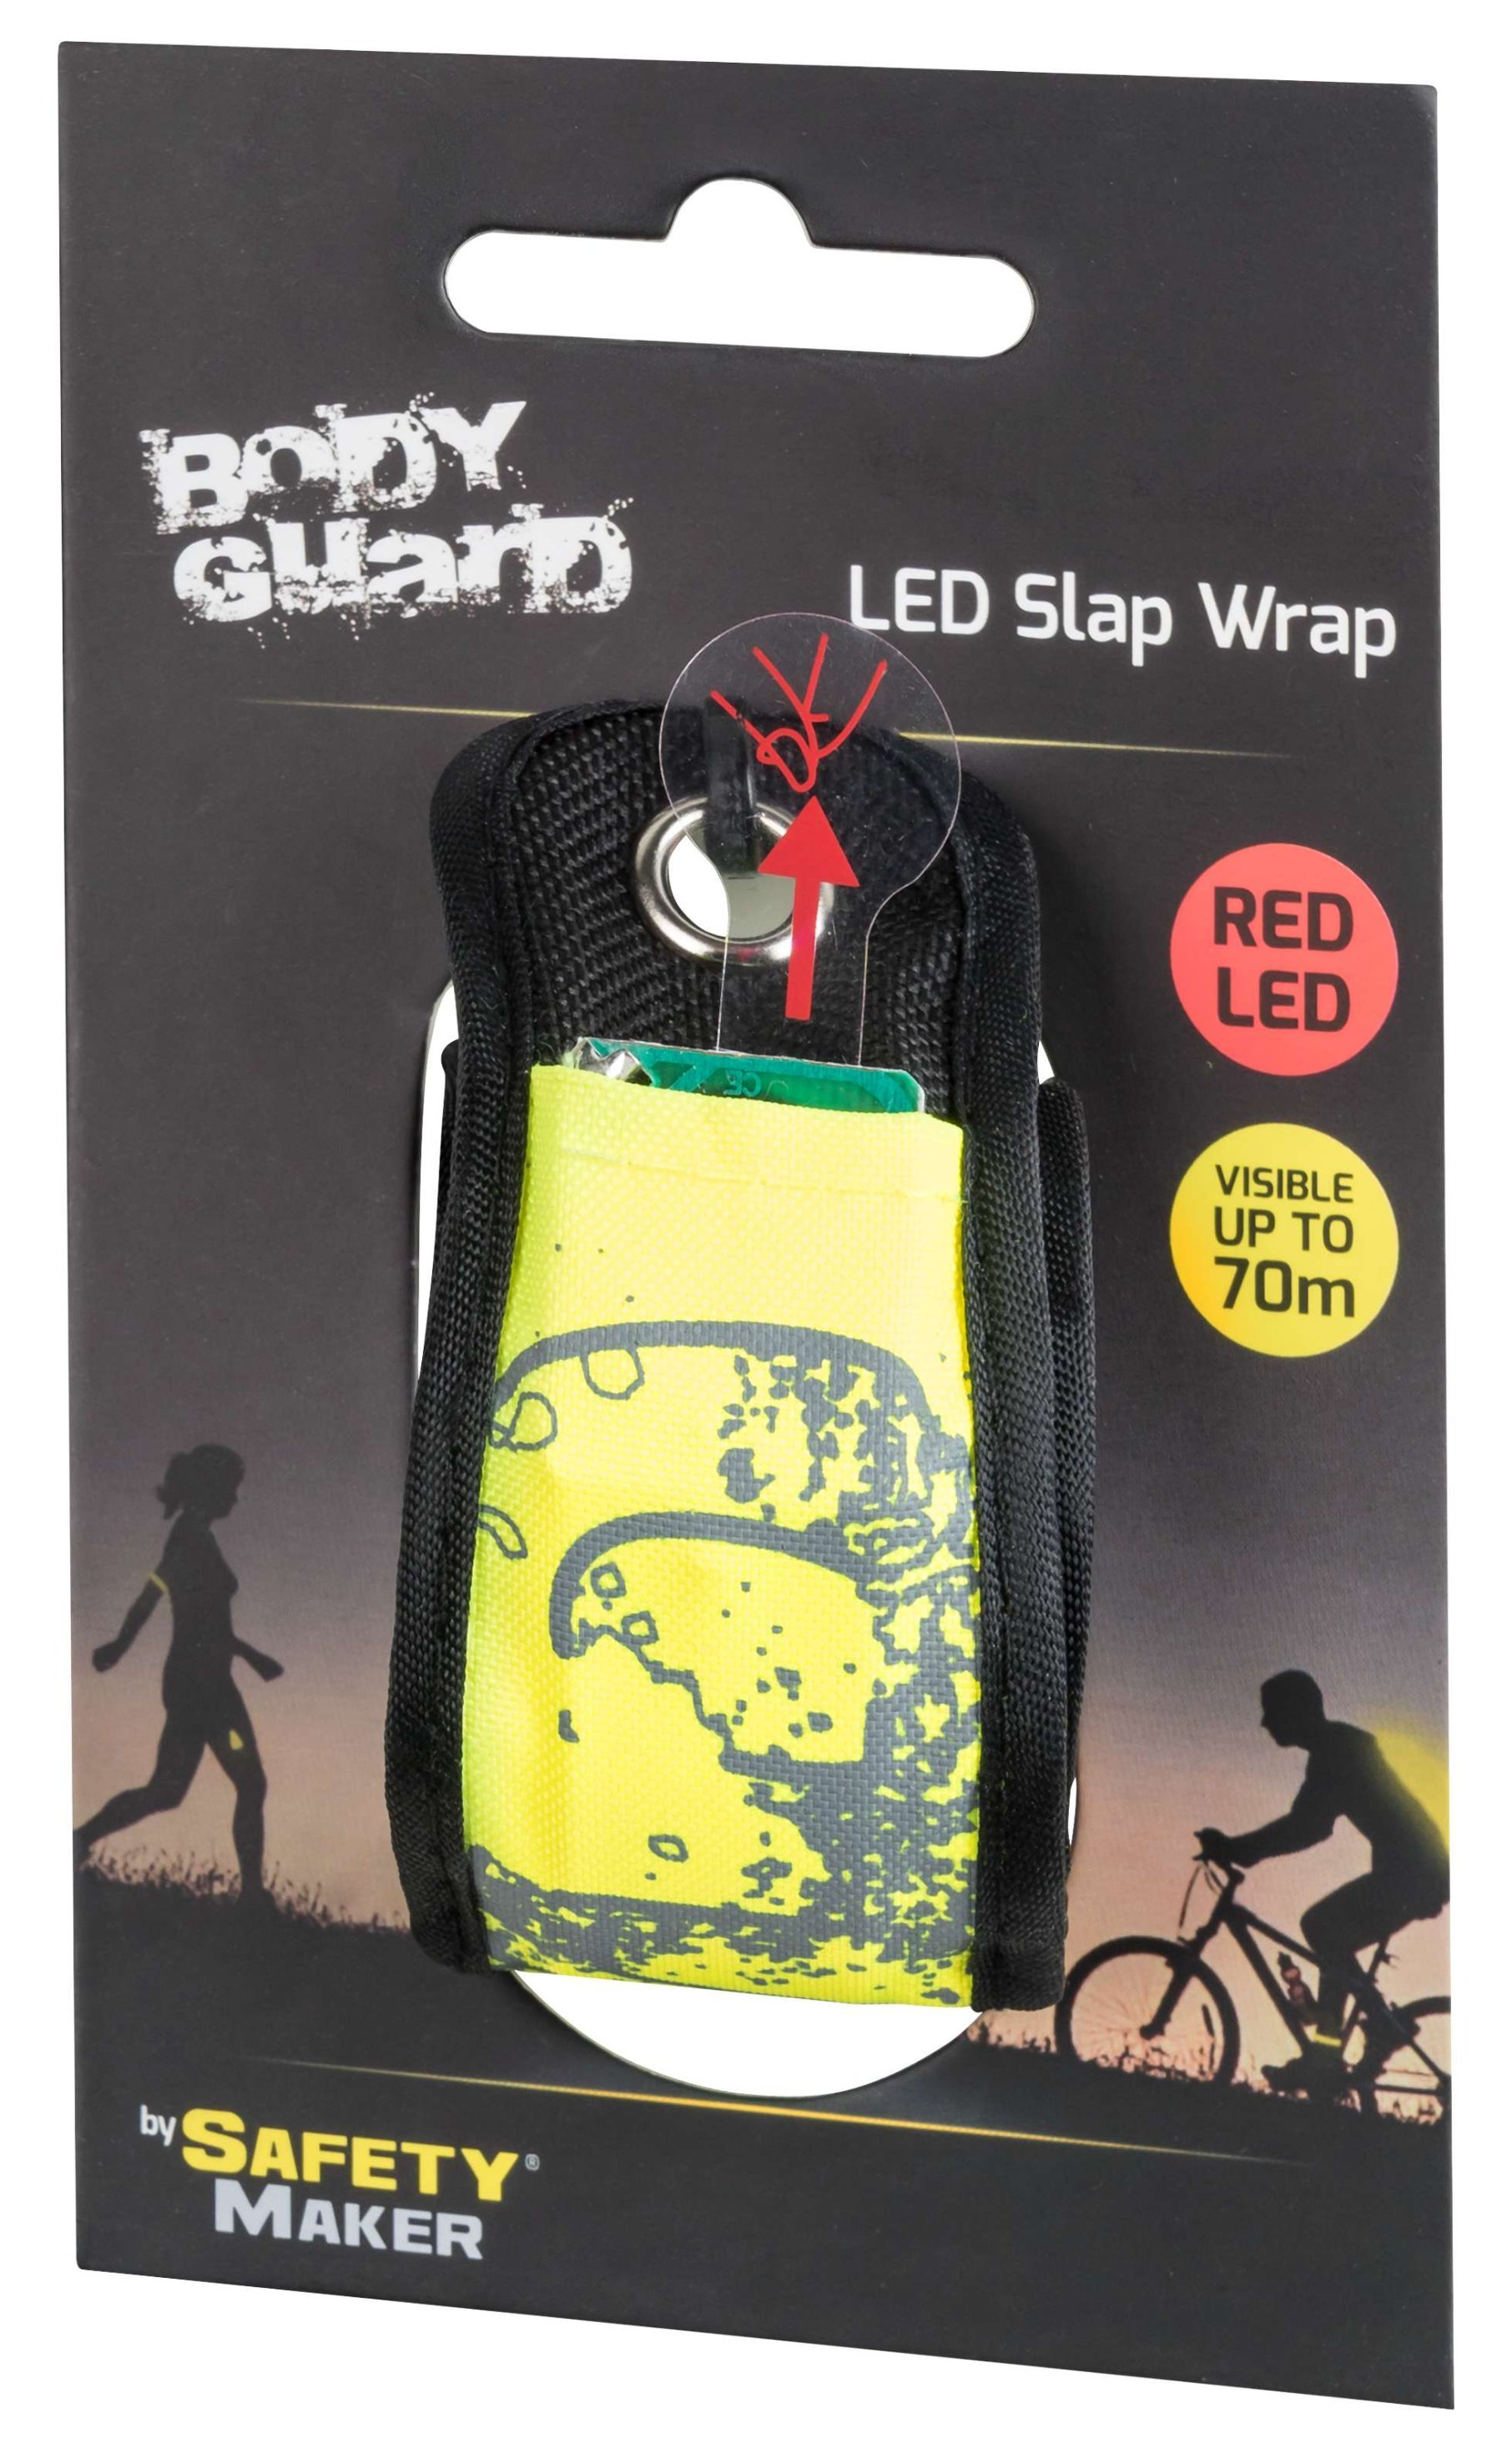 LED Klackband, leuchtendes Slap Wrap gelb